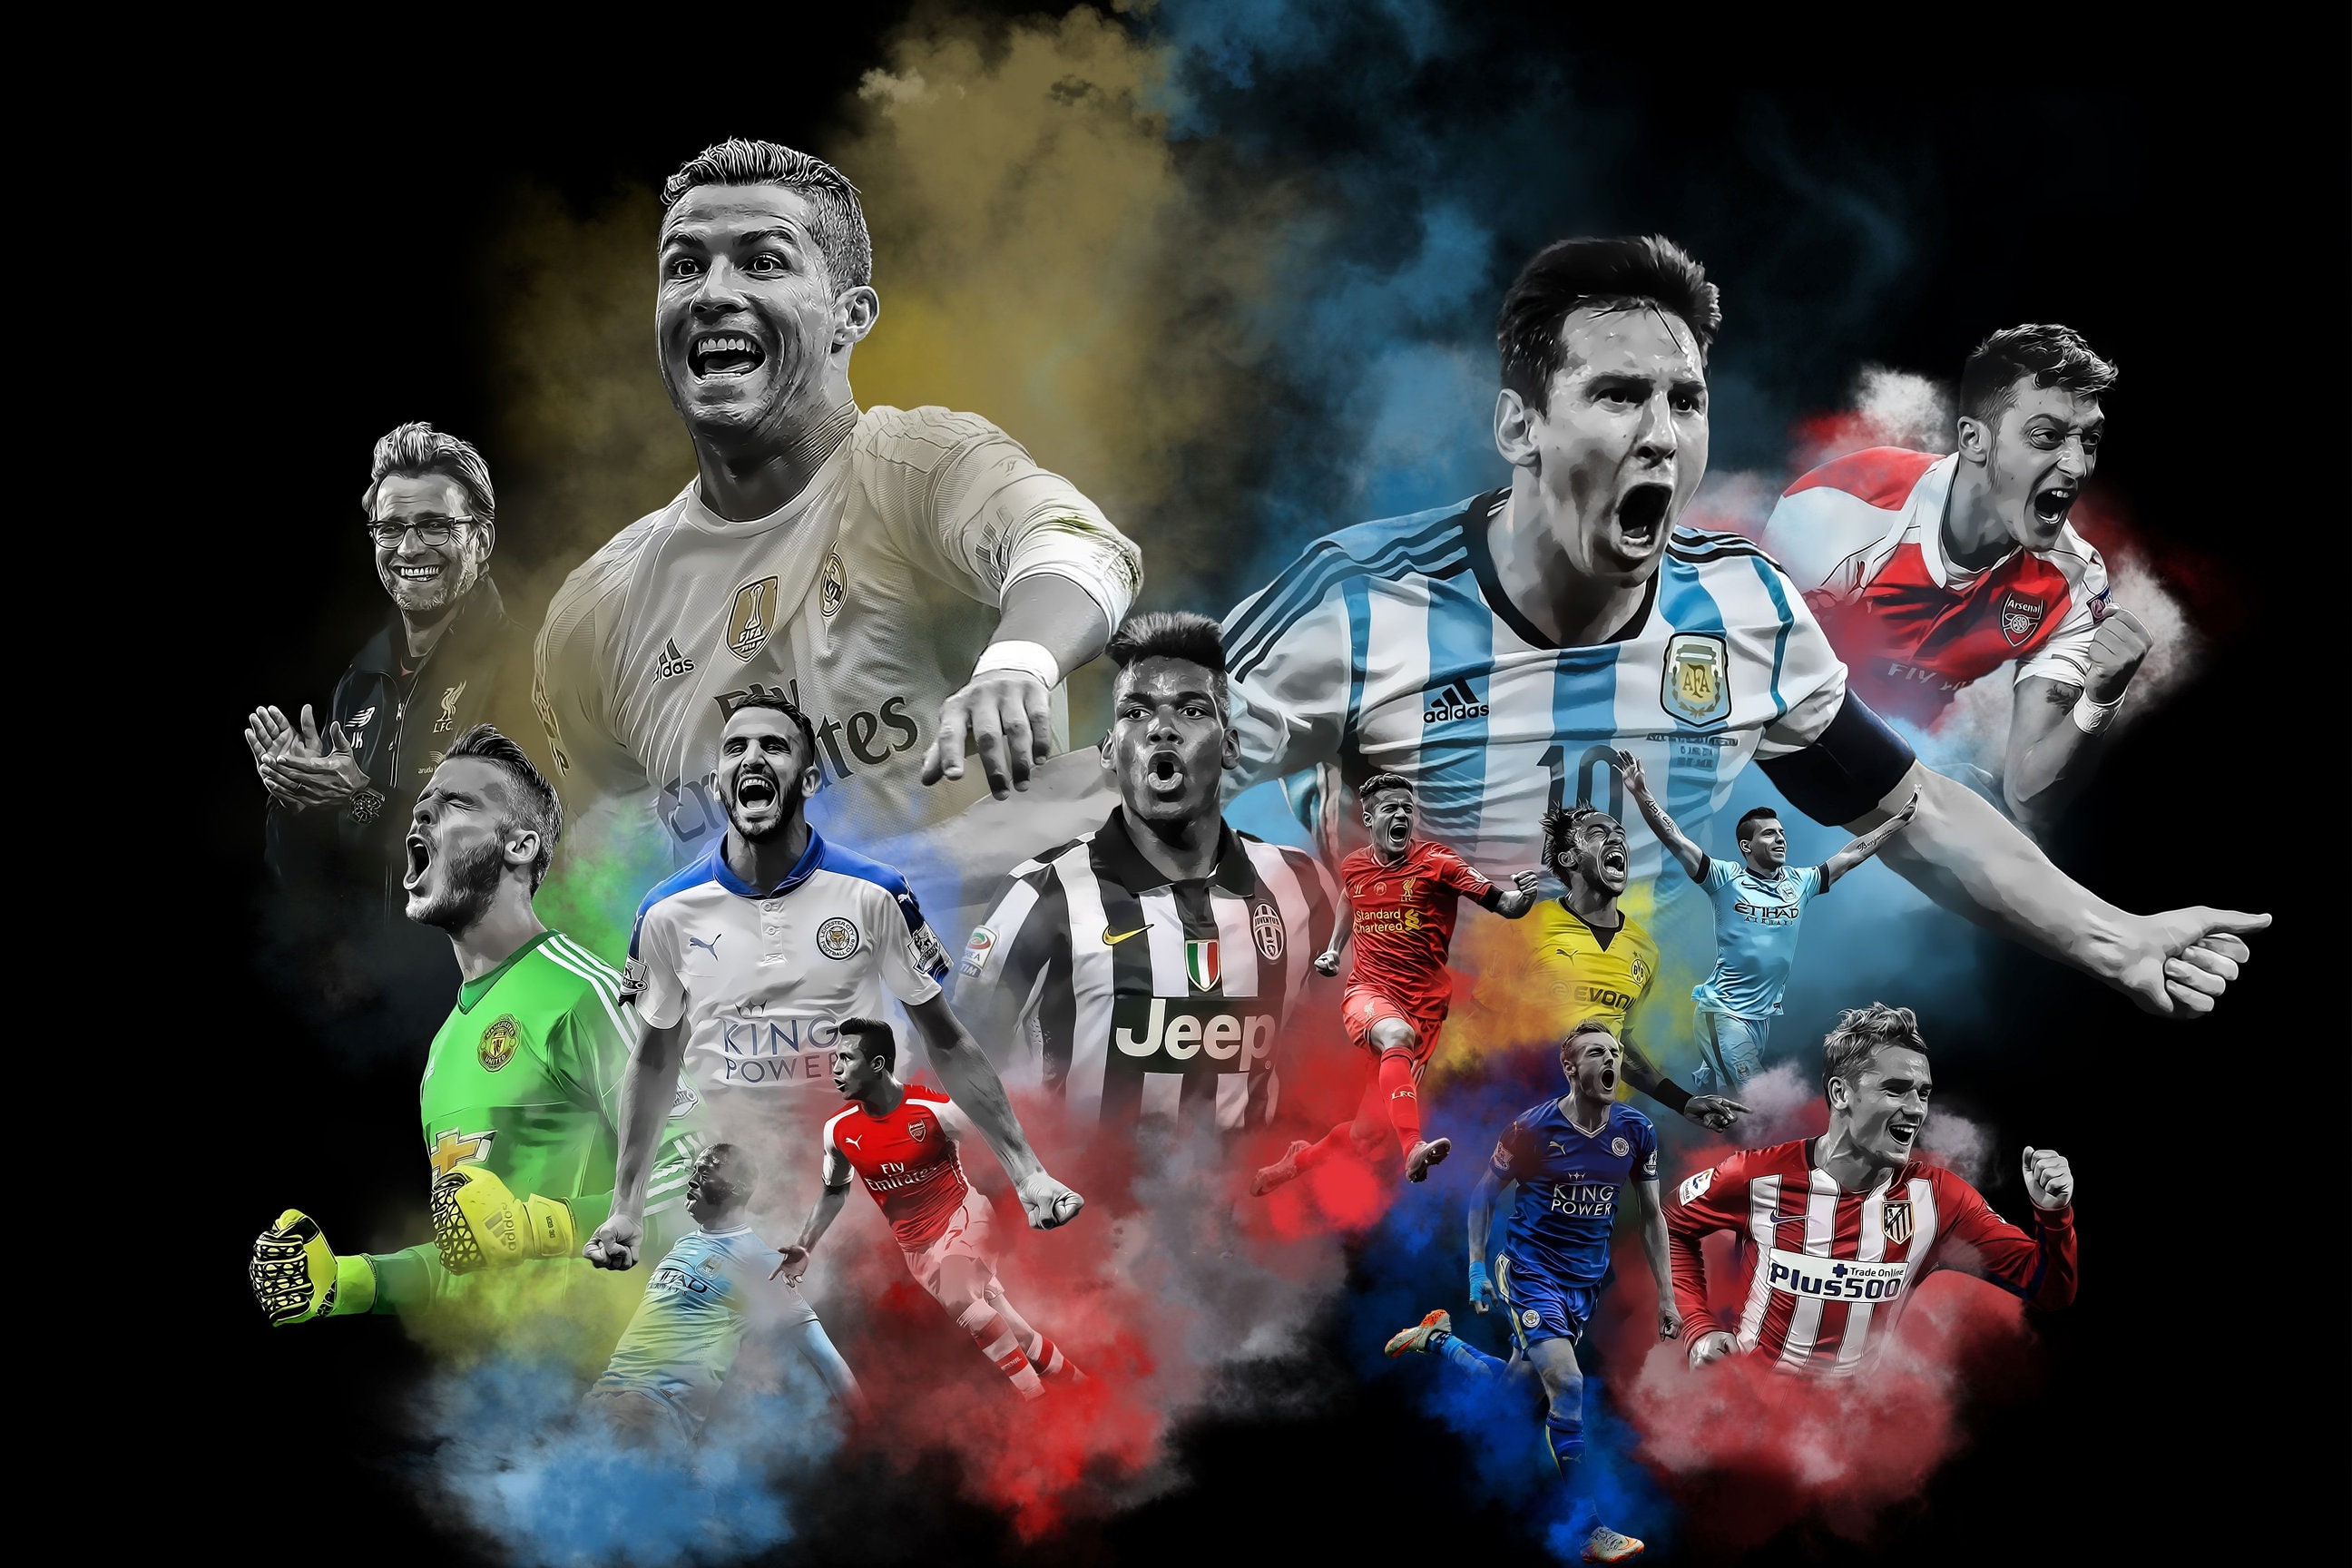 Ecuadorian soccer heroes' jerseys